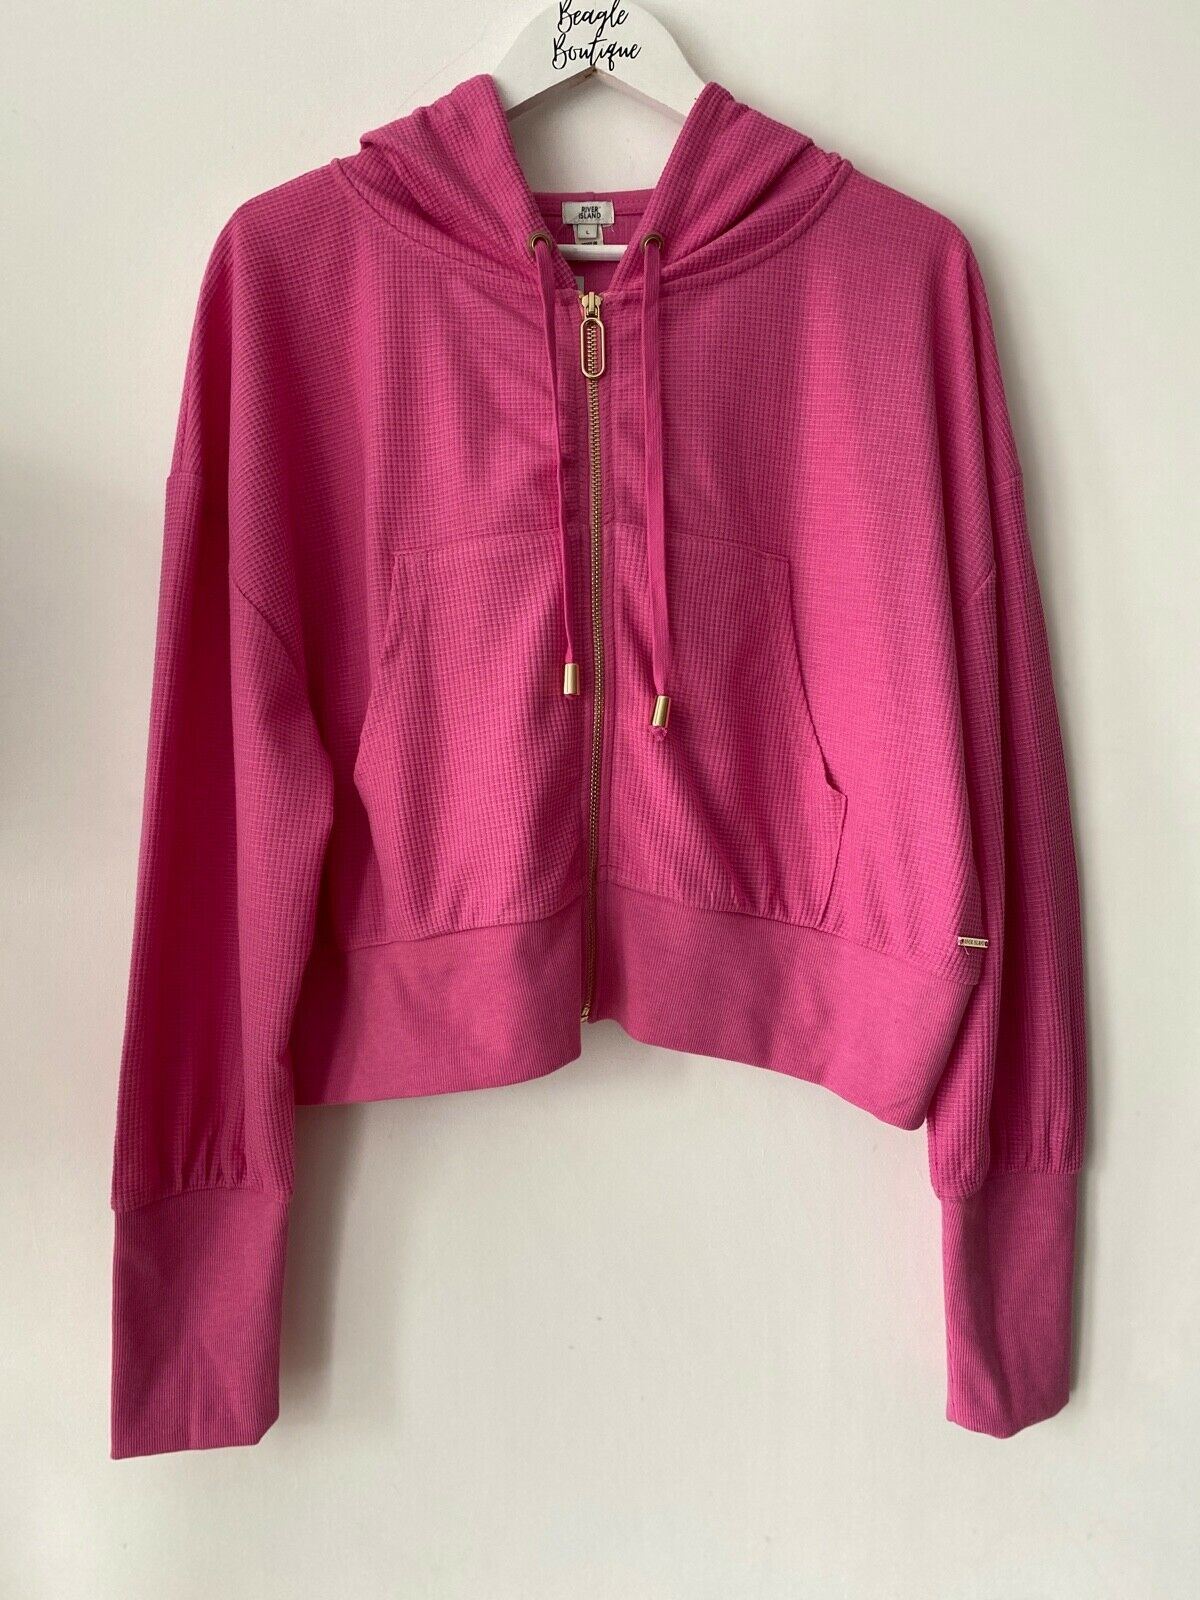 River Island Pink Loungewear Zip Pink Cuffed Hoodie Size L